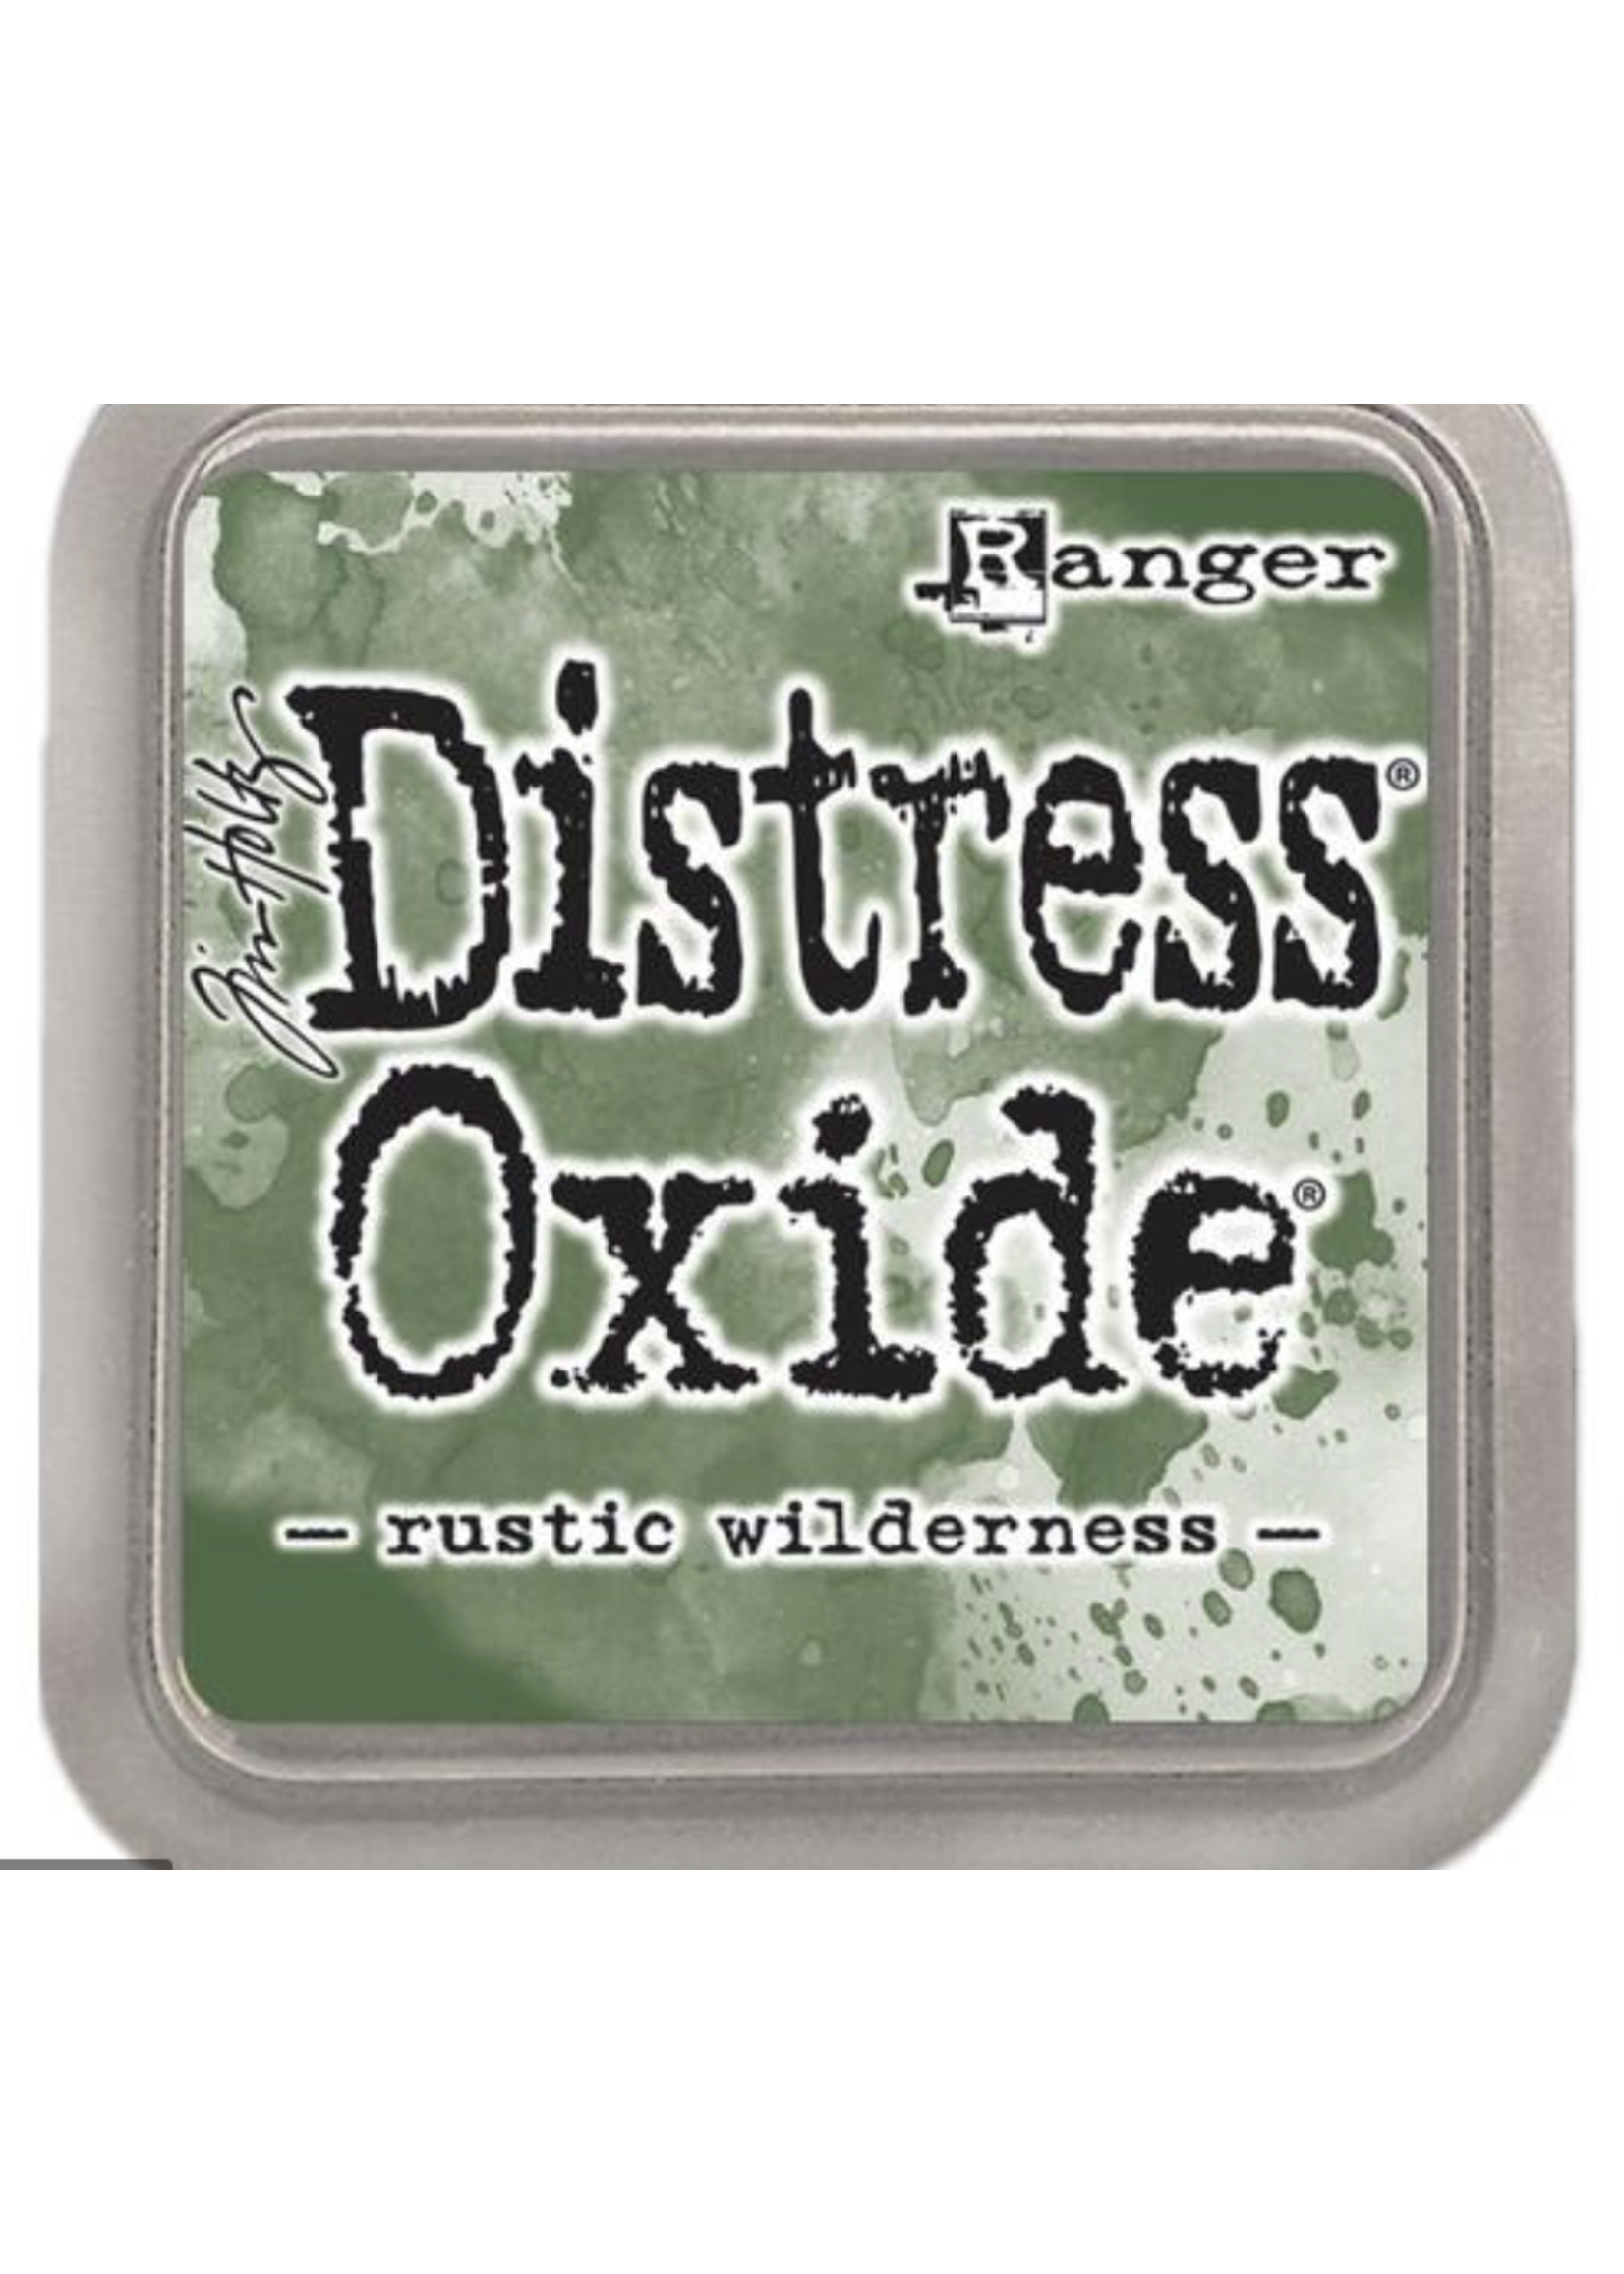 Tim Holtz Distress Oxide Ink Pad: Rustic Wilderness - Creative Escape